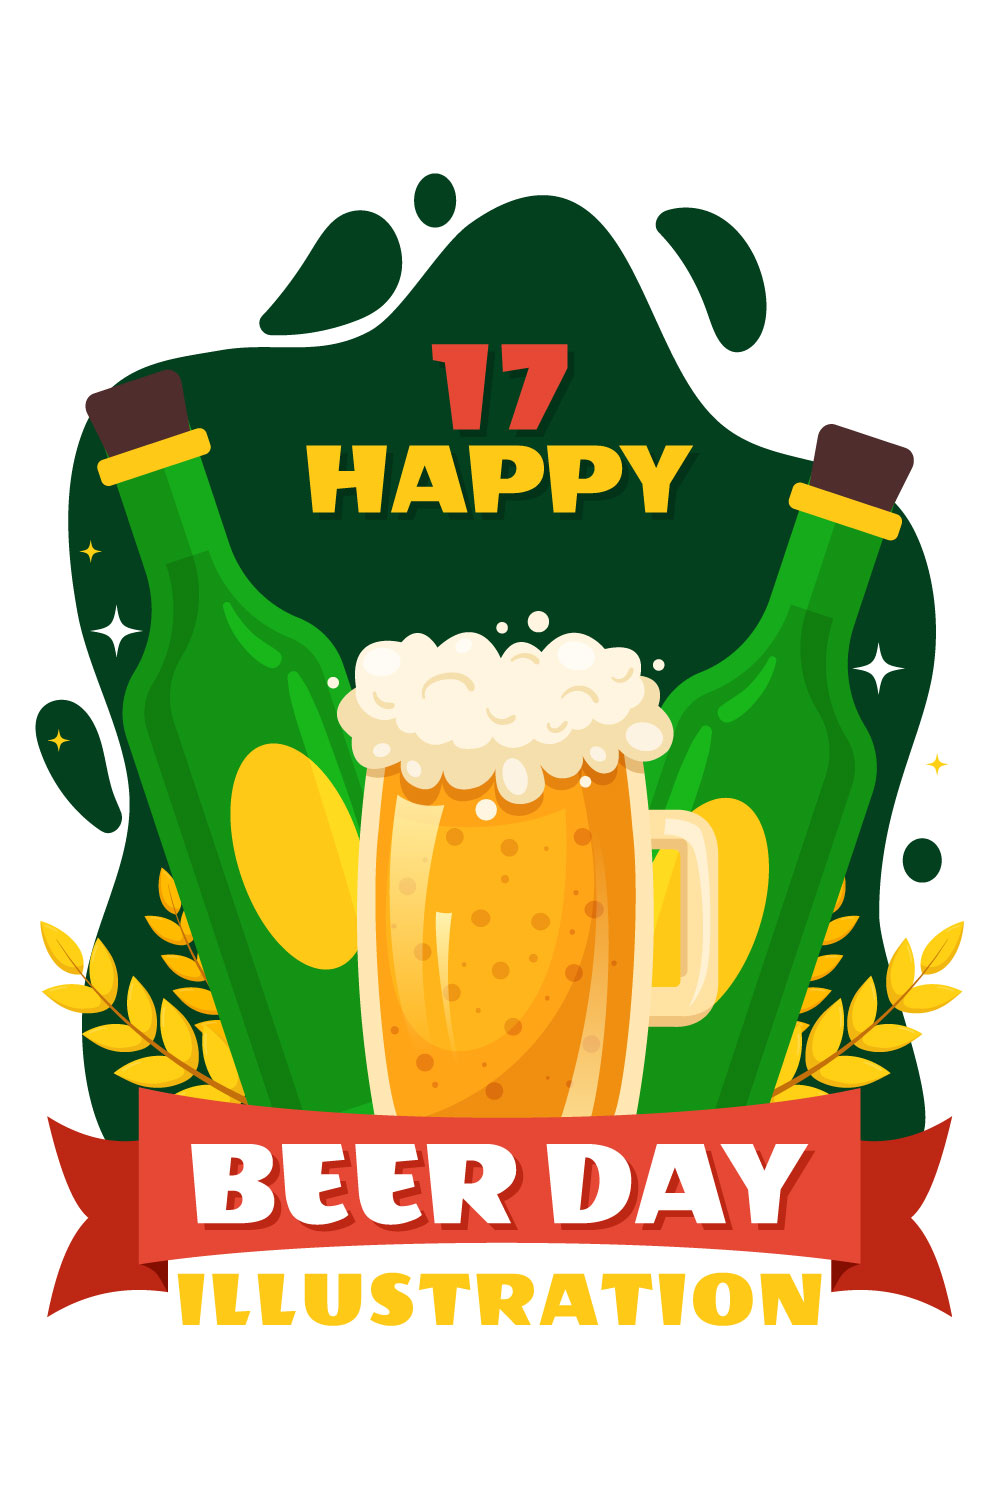 17 International Beer Day Illustration pinterest preview image.